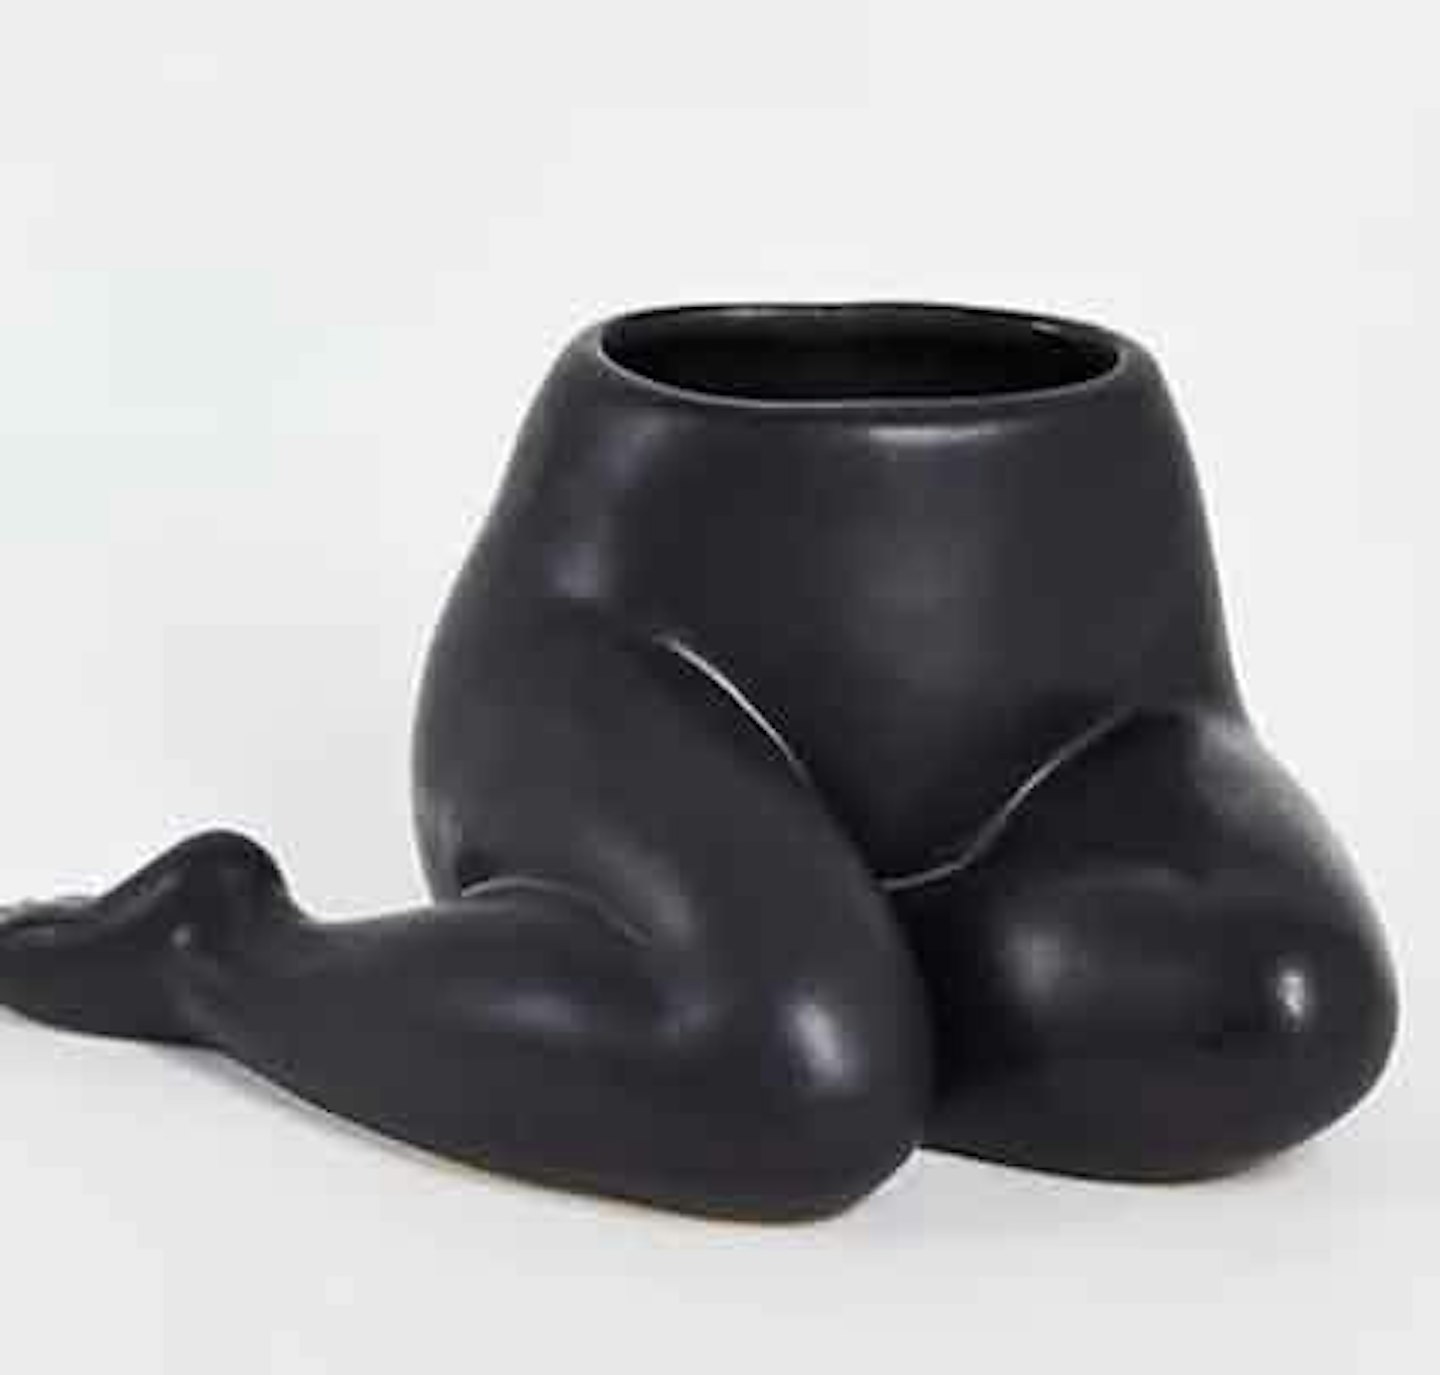 Monki Ariel body vase in matte black